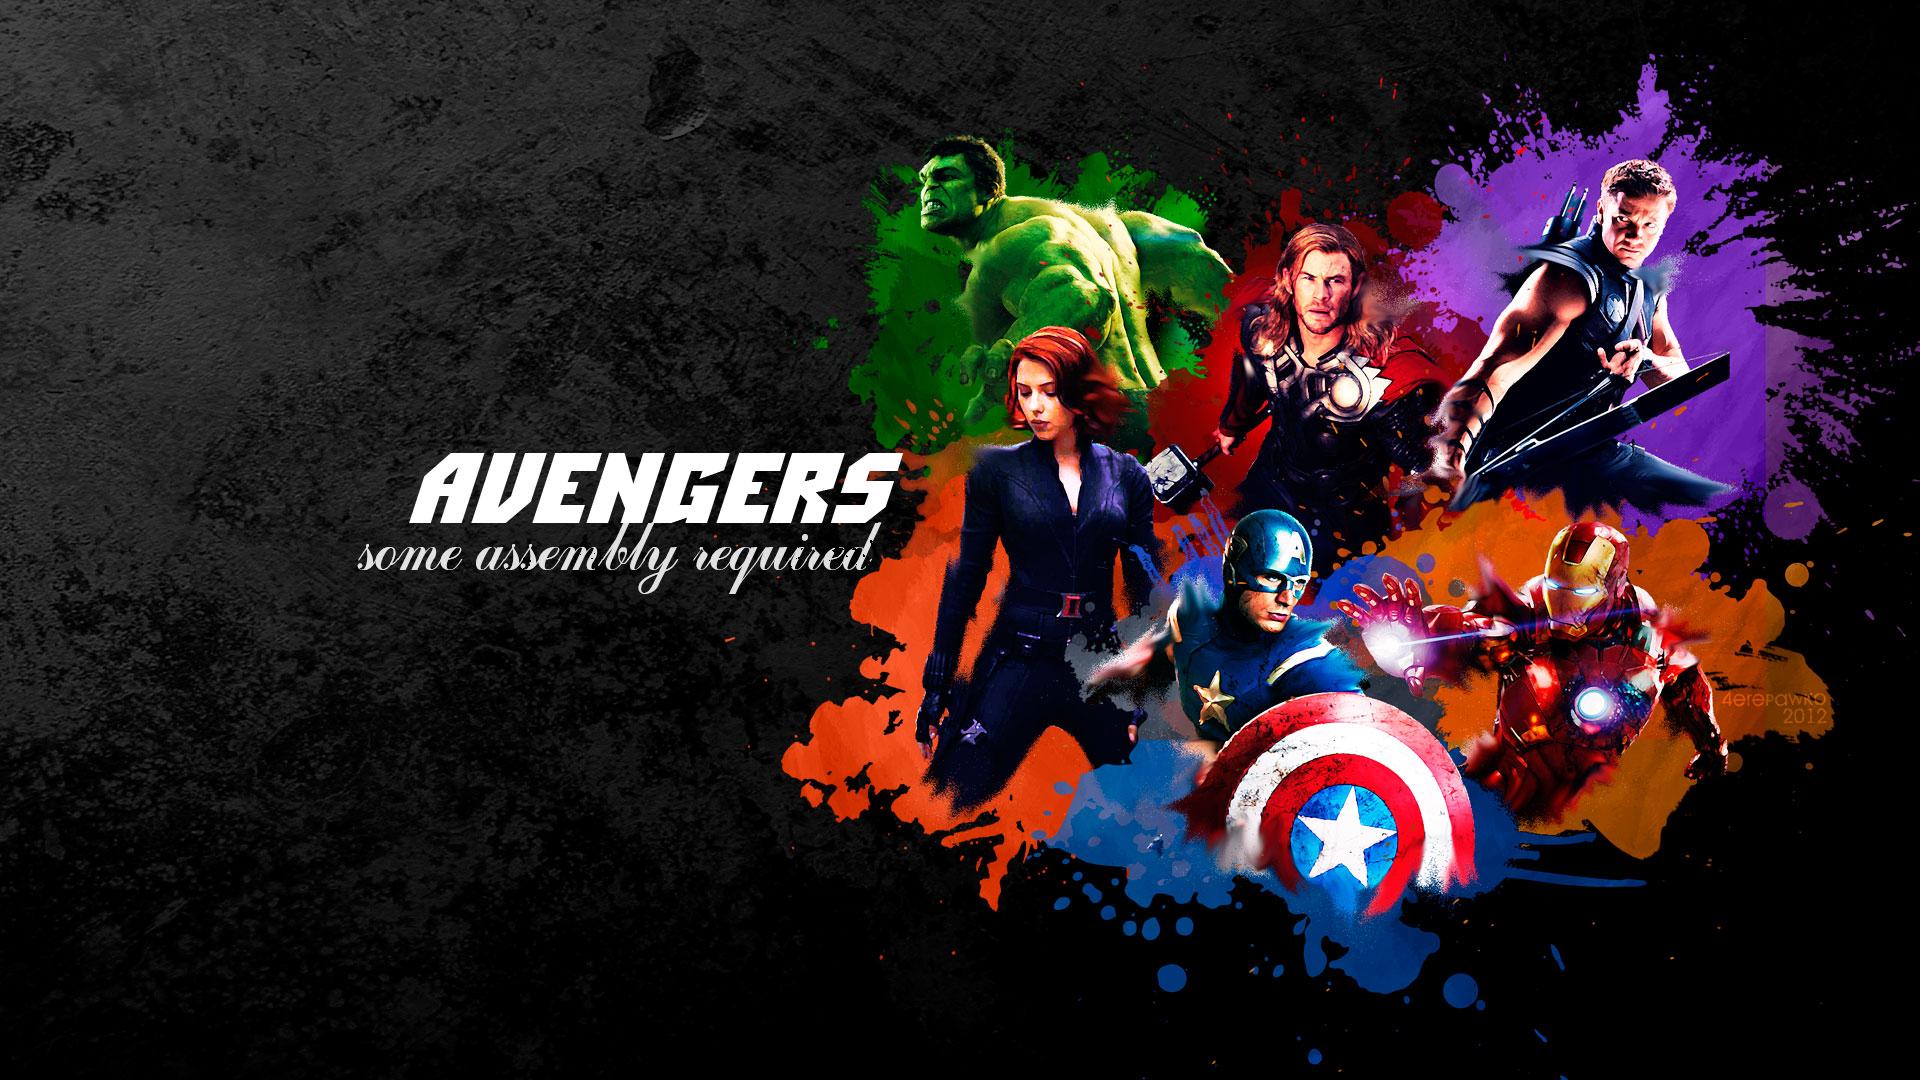 Free download The Avengers Wallpaper For Deskx1080 Movie